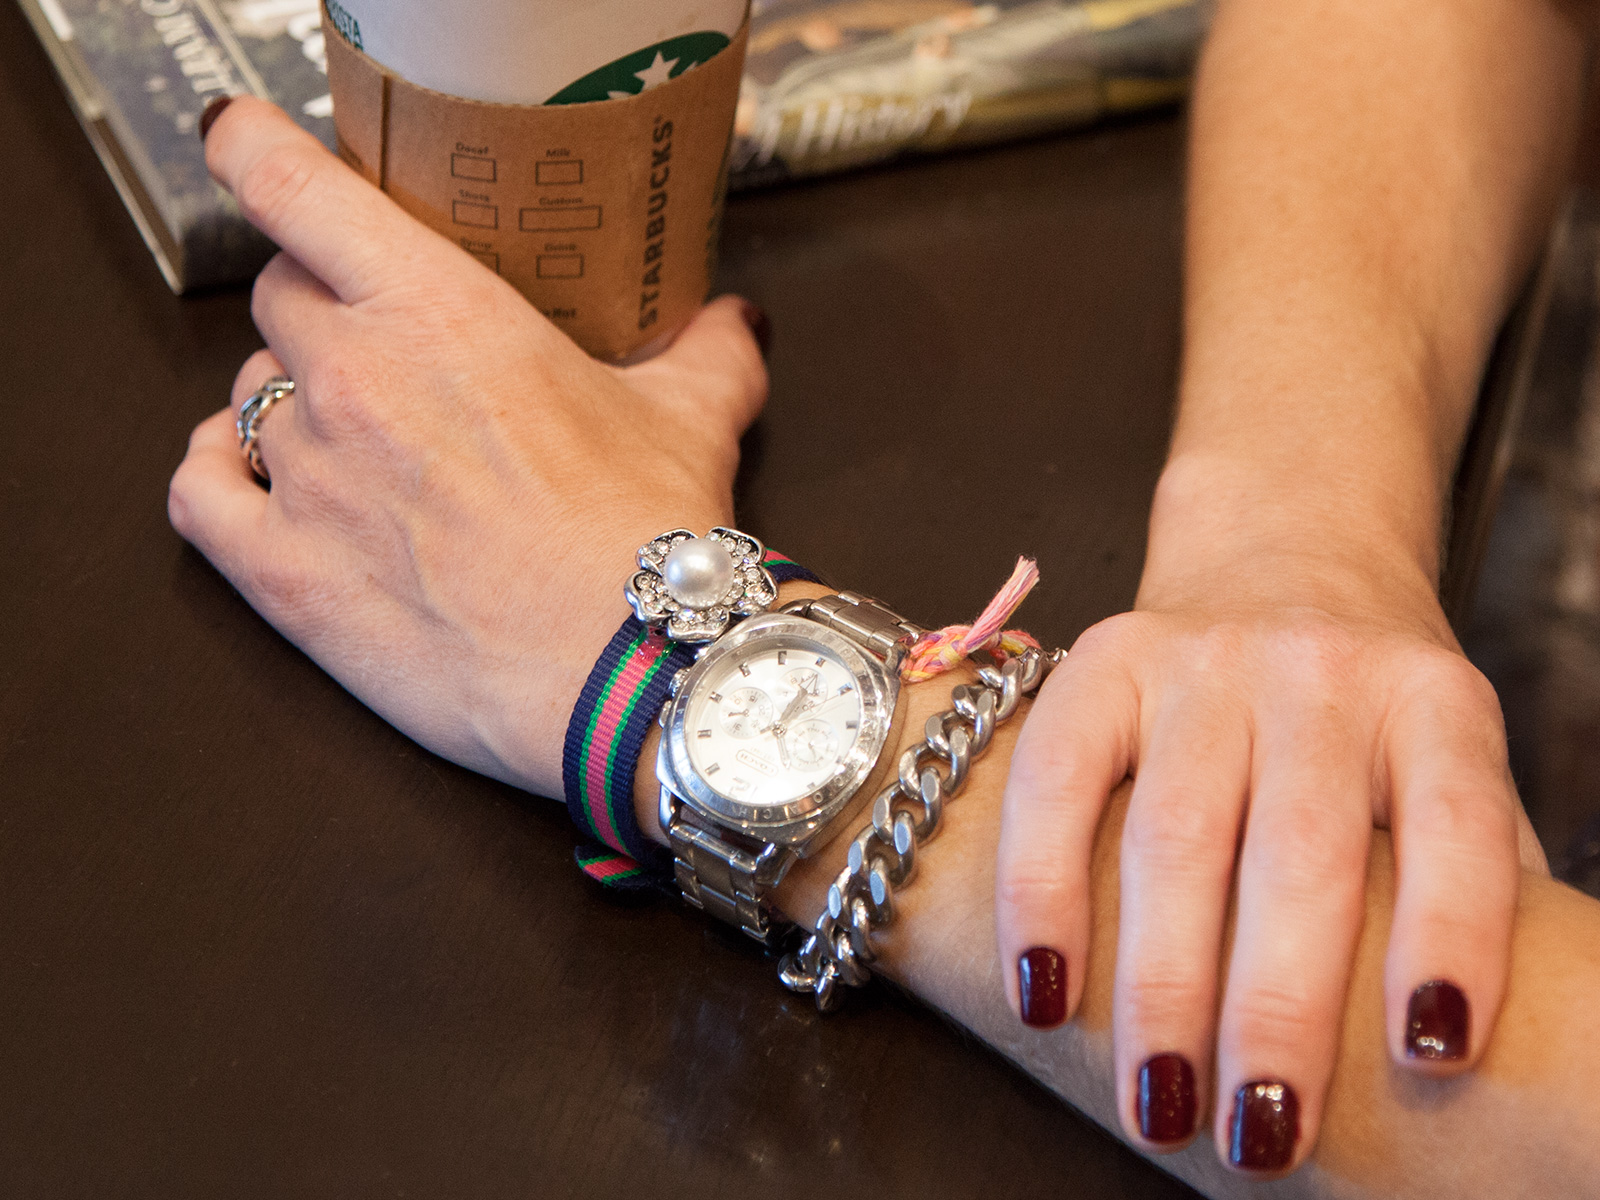 Watch Strap Rhinestone Bracelet DIY Photo 2 by Trinkets in Bloom